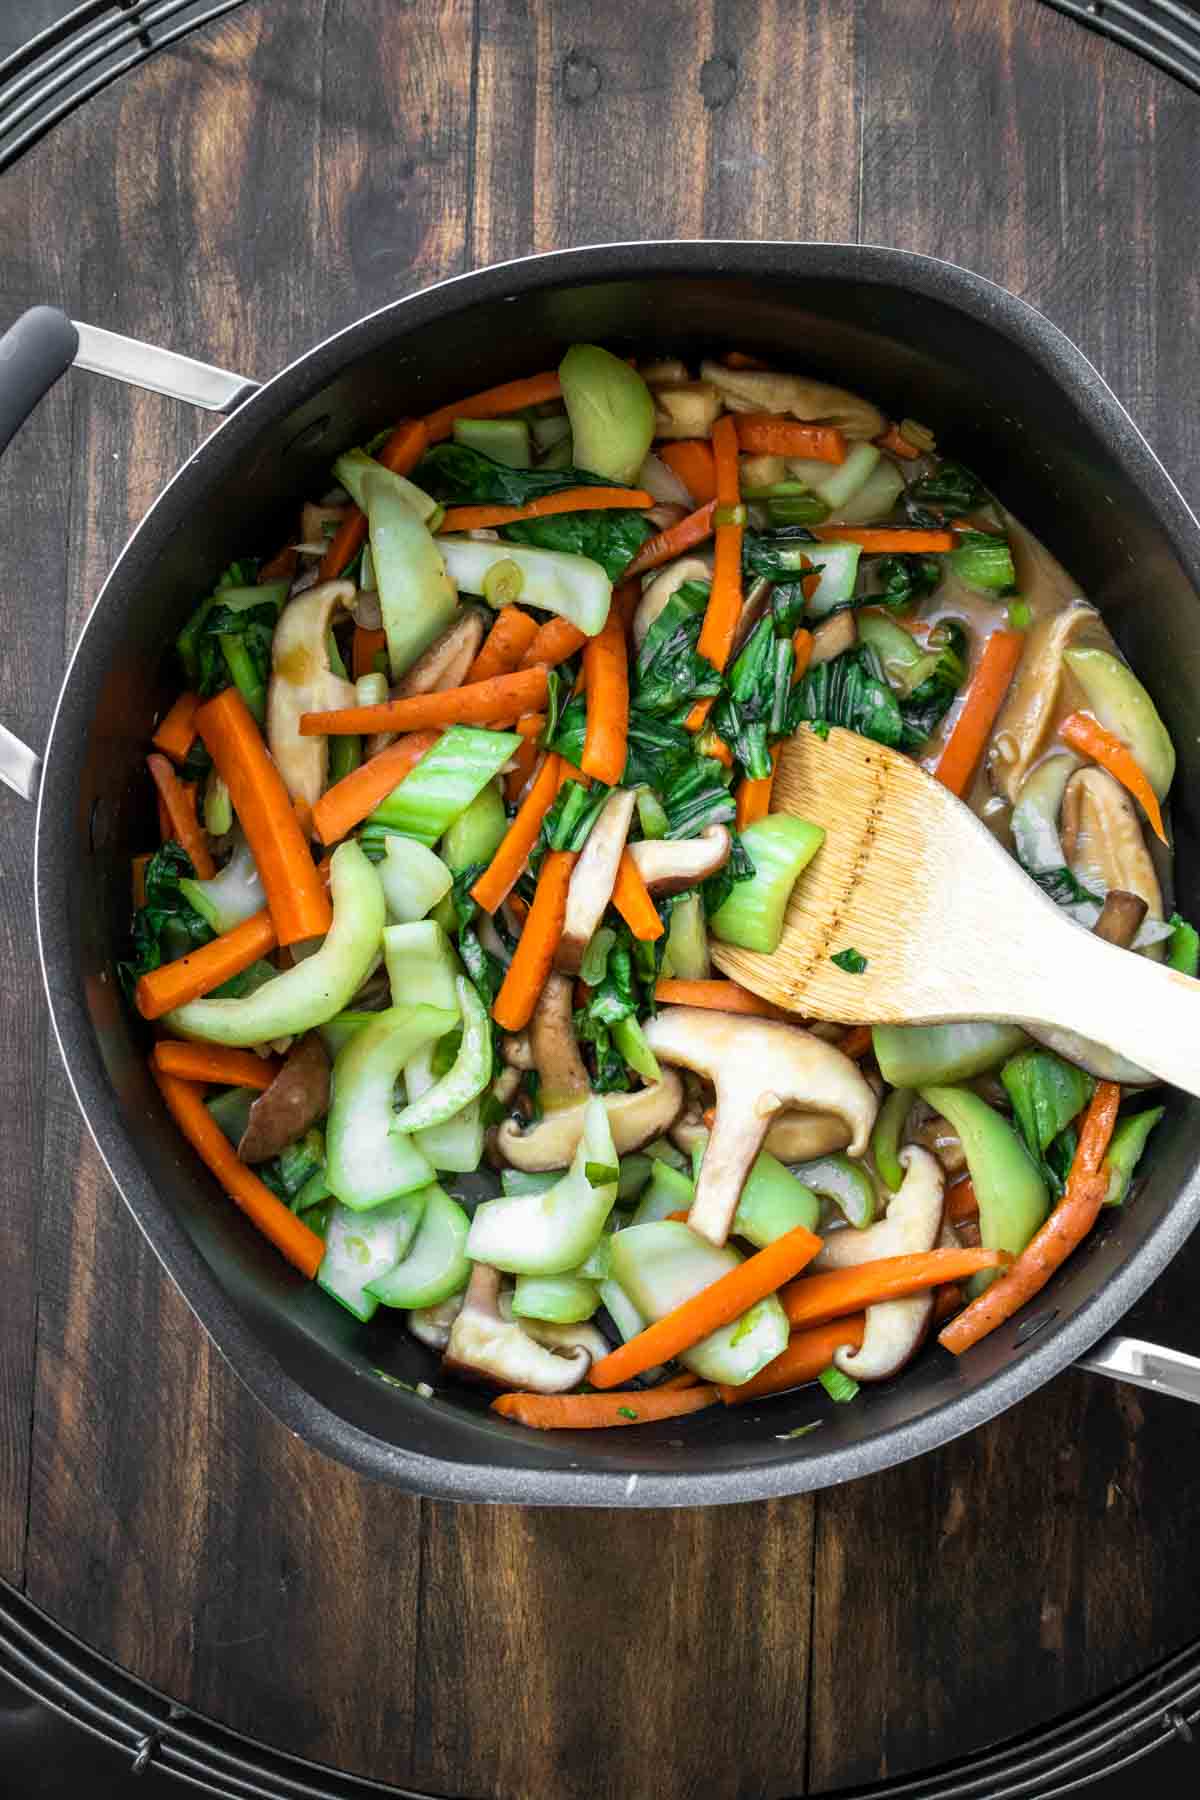 Wooden spoon stirring veggies in a pot.